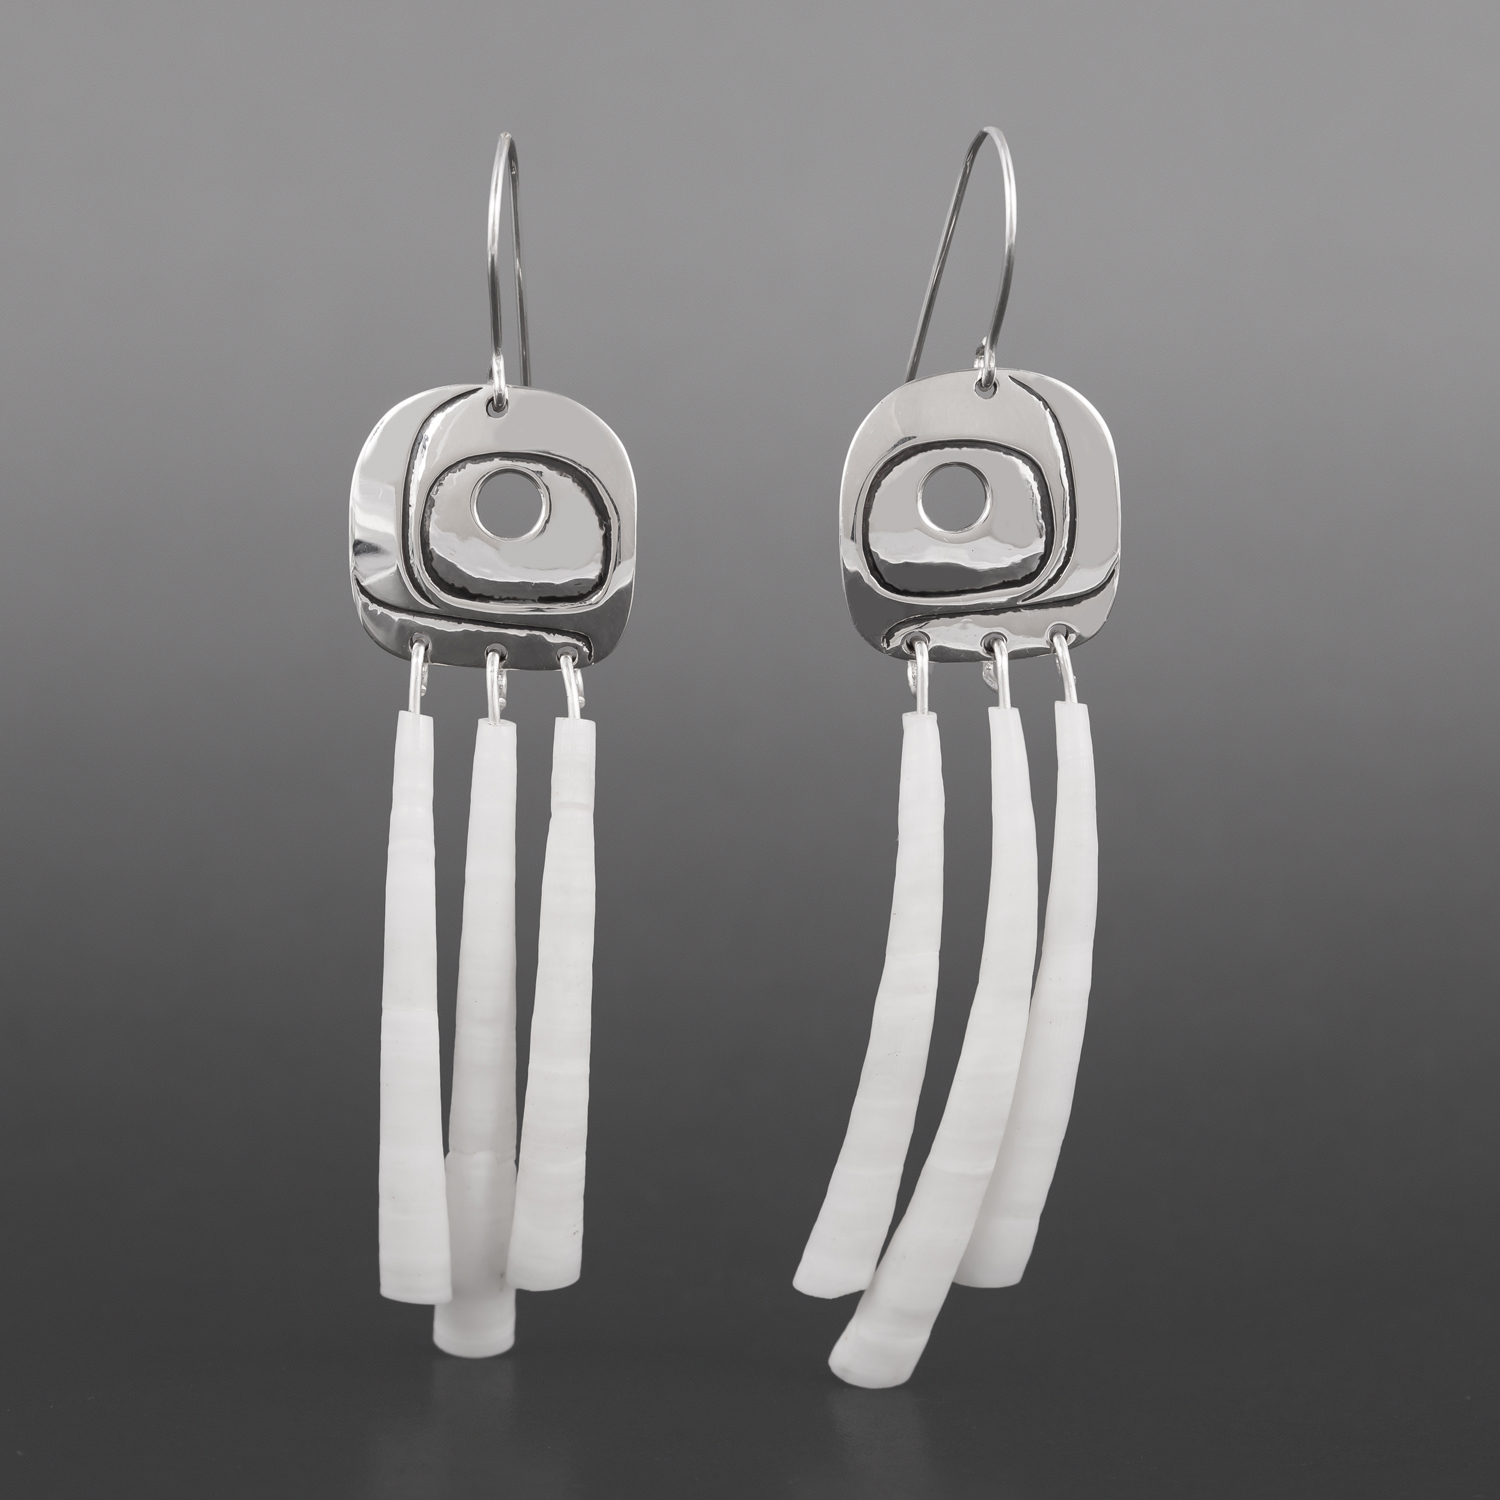 Jellyfish II Earrings
Clinton Work
Silver, dentalia
2" x ¾”
$300
